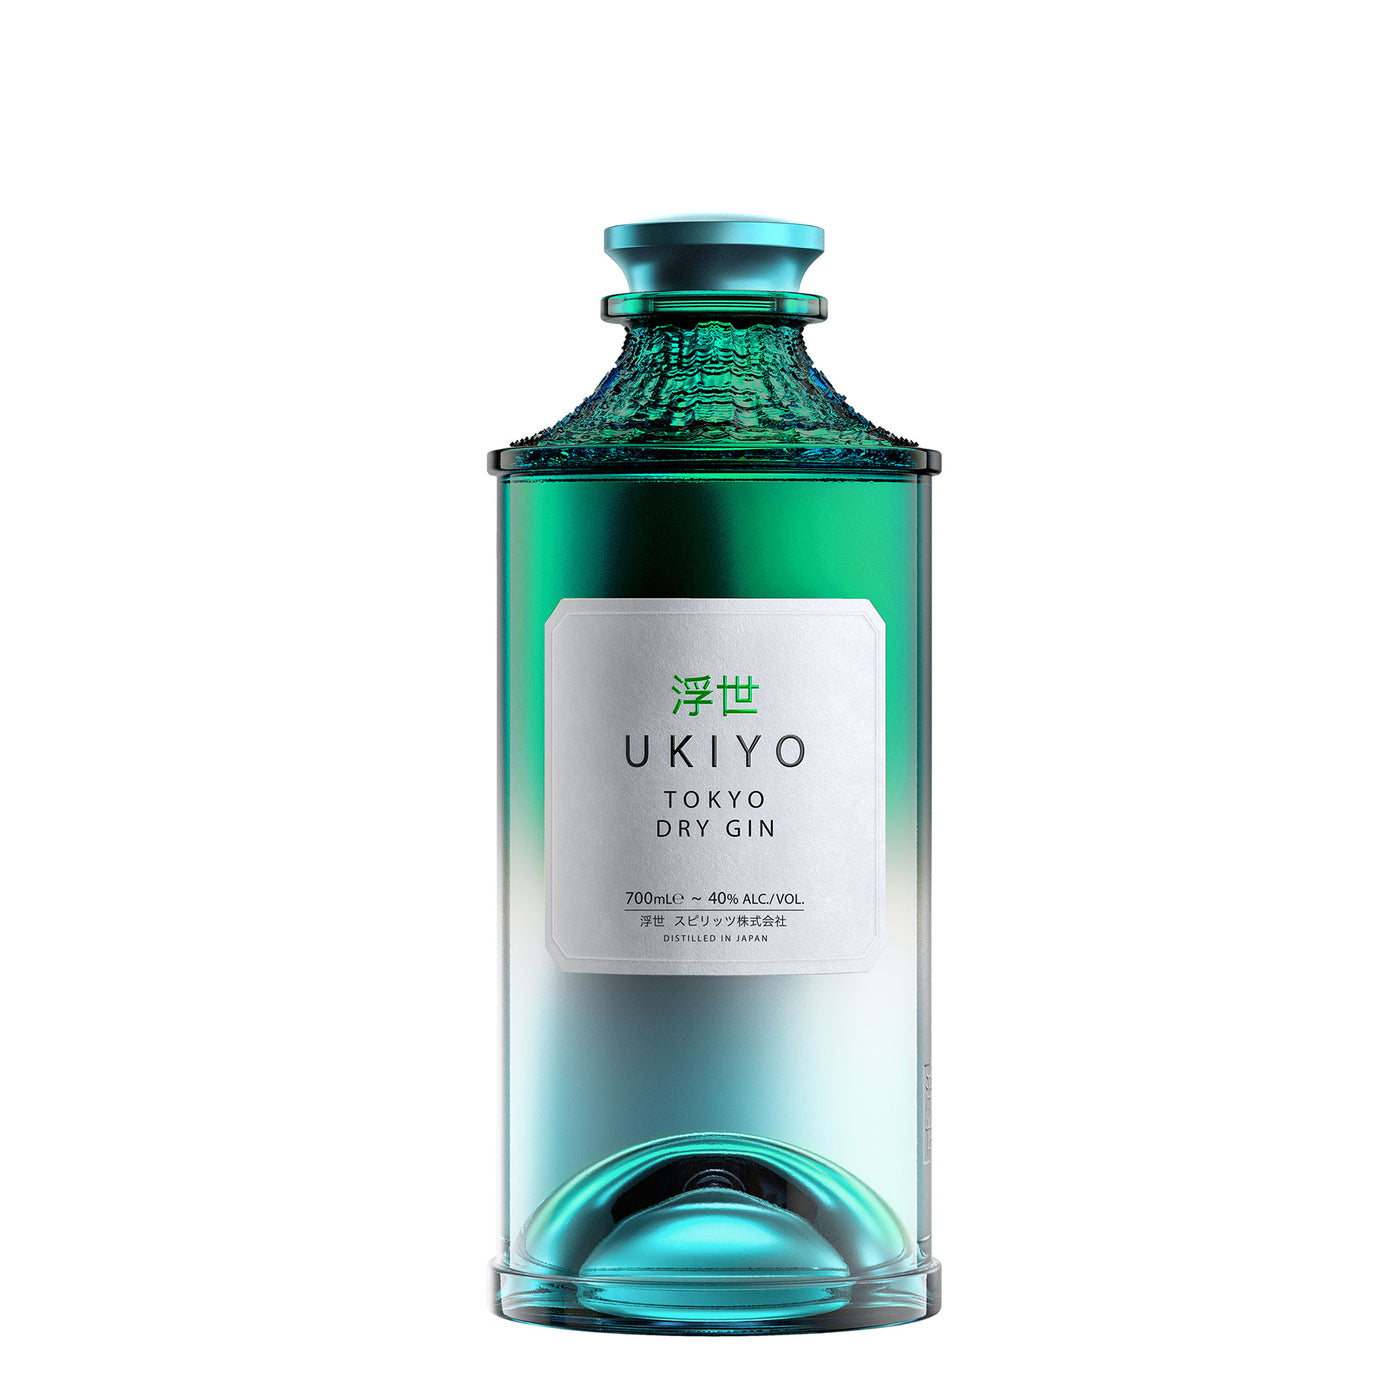 Ukiyo Tokyo Dry Gin - Spiritly